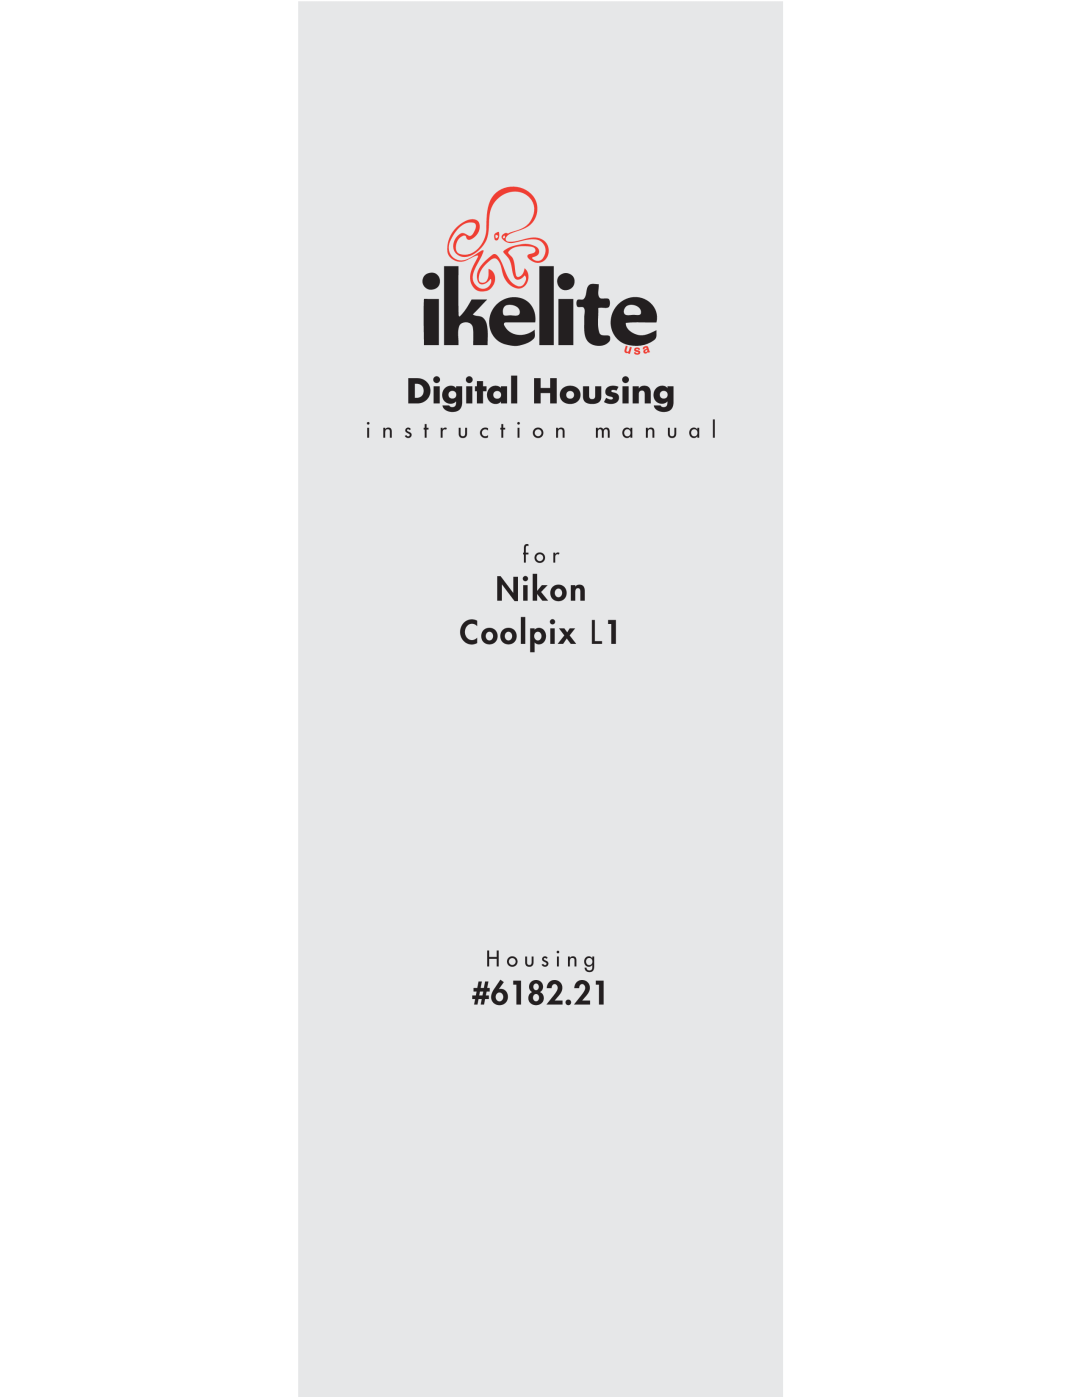 Ikelite instruction manual Digital Housing, Nikon Coolpix L1, #6182.21, i n s t r u c t i o n m a n u a l f o r 